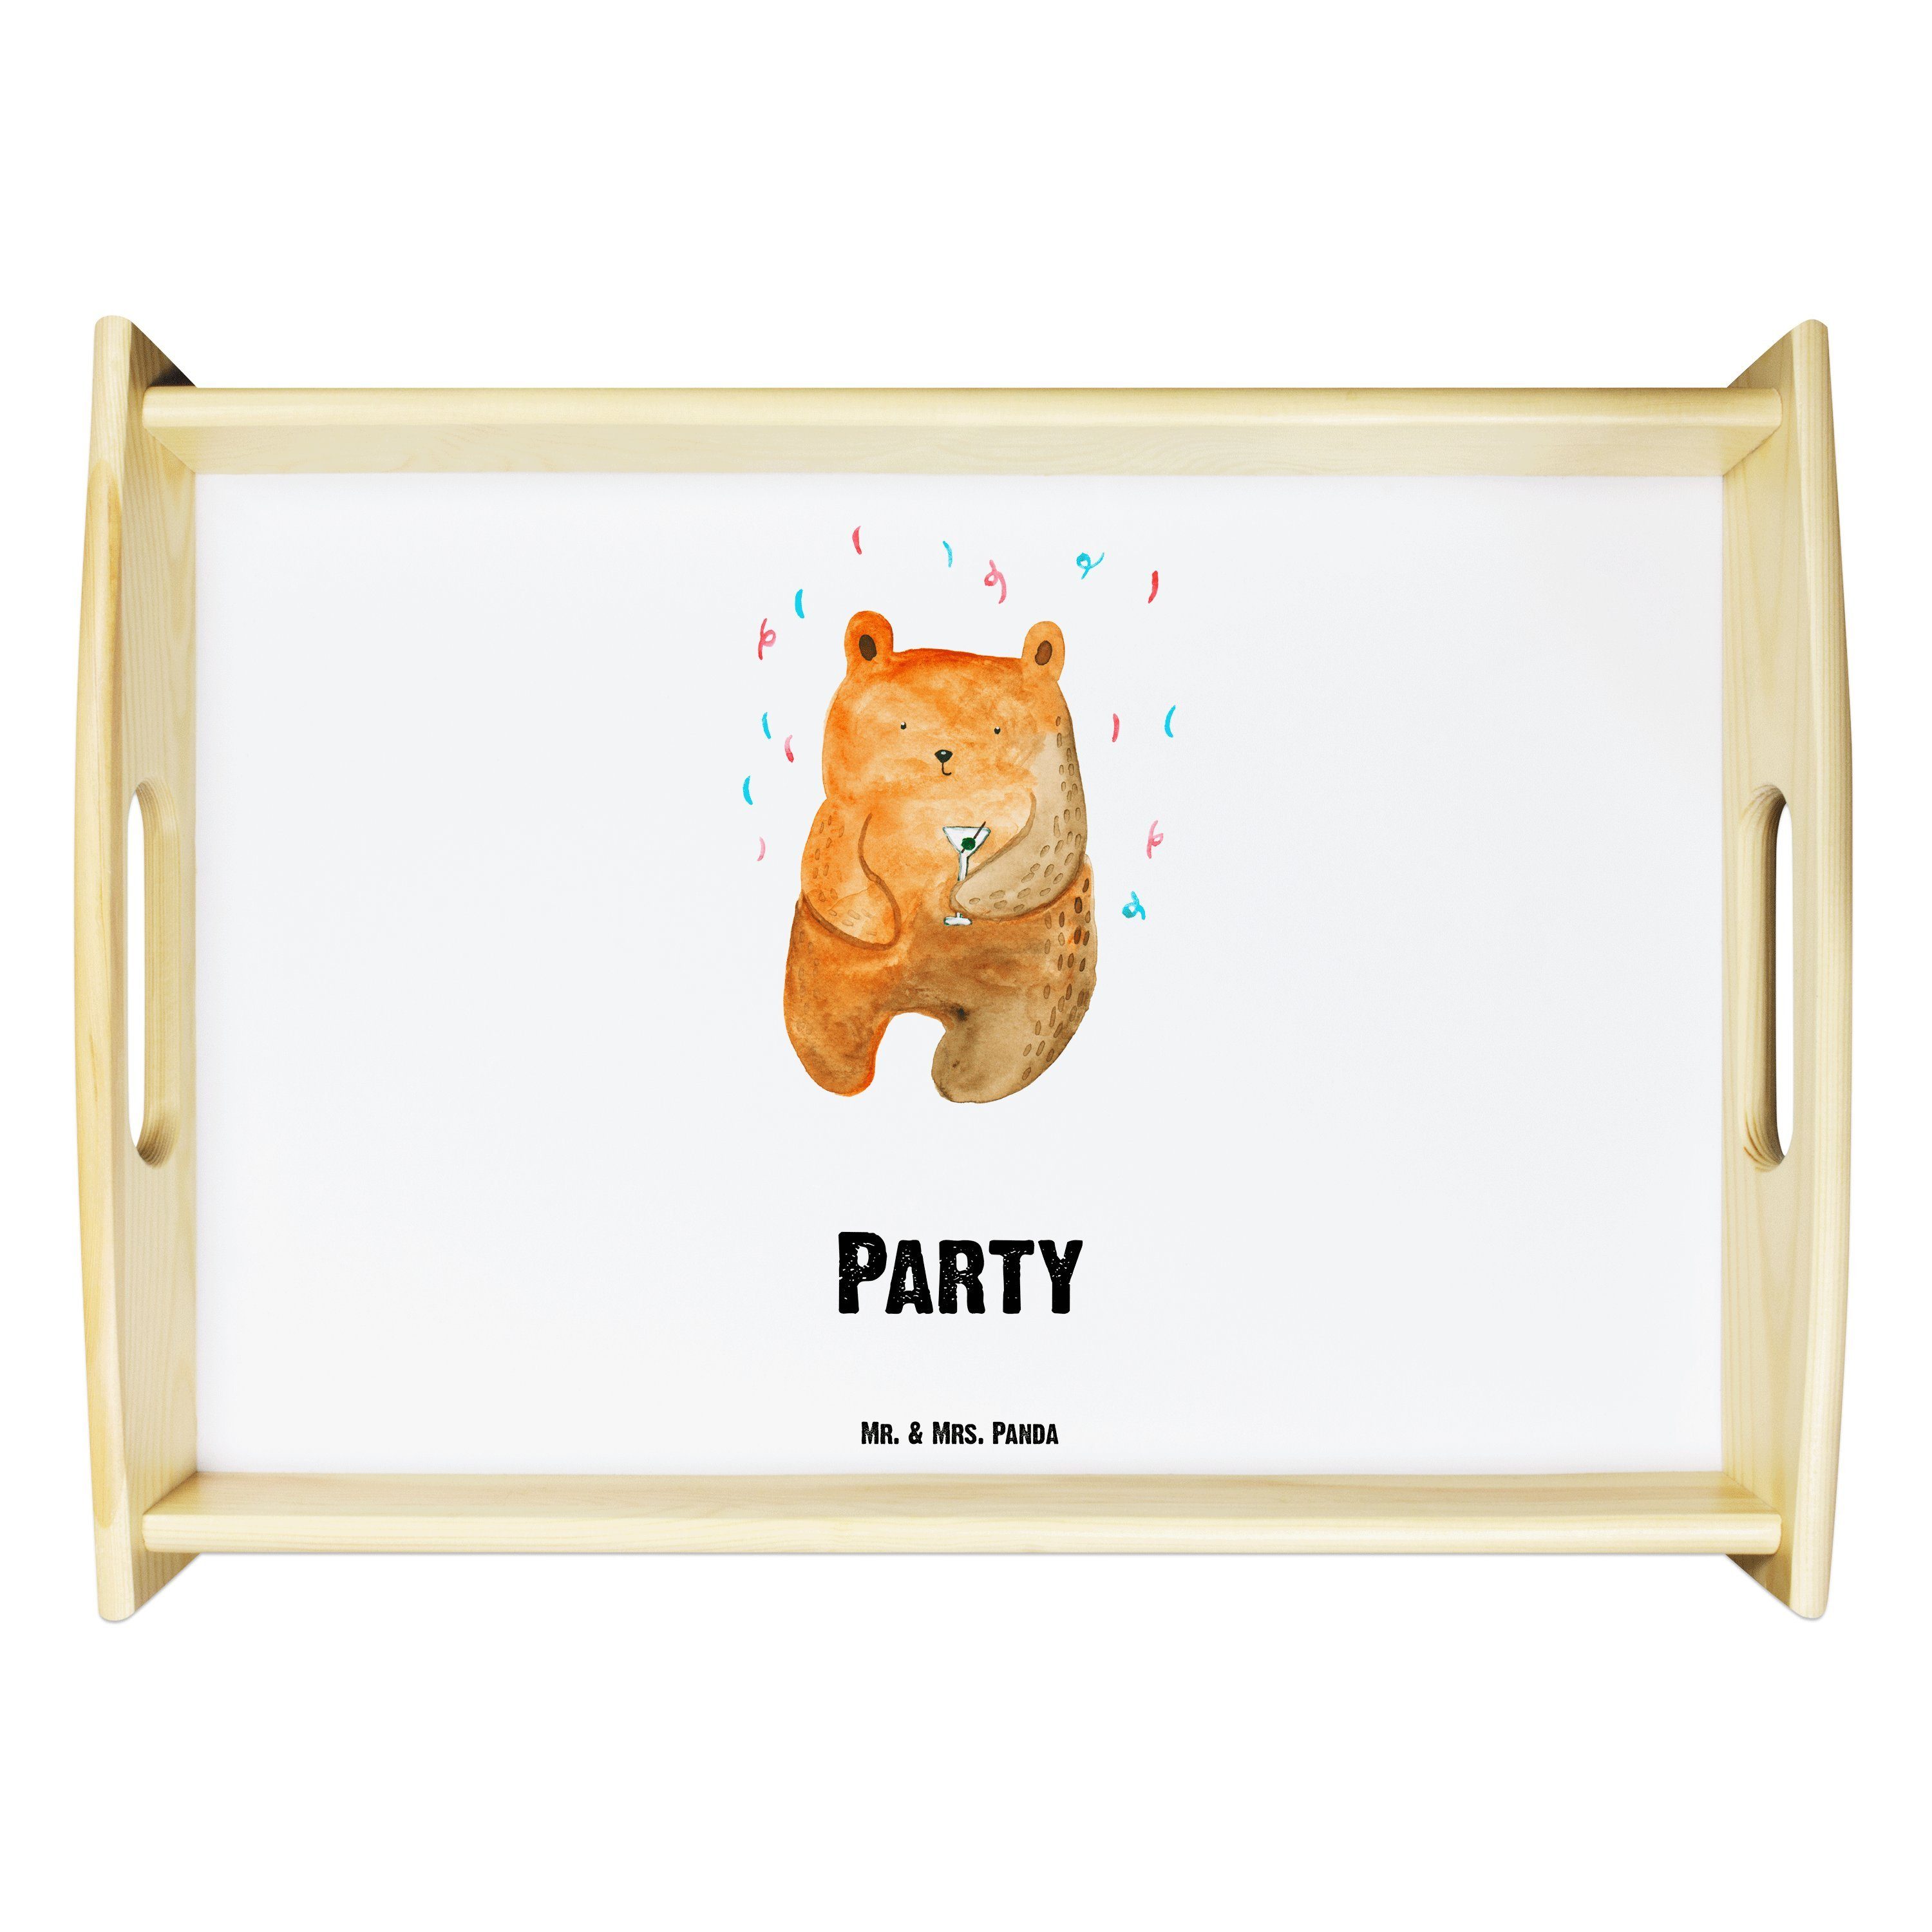 Mr. & Mrs. Panda Tablett Bär Party - Weiß - Geschenk, Teddy, Dekotablett, Holztablett, Abfeier, Echtholz lasiert, (1-tlg)